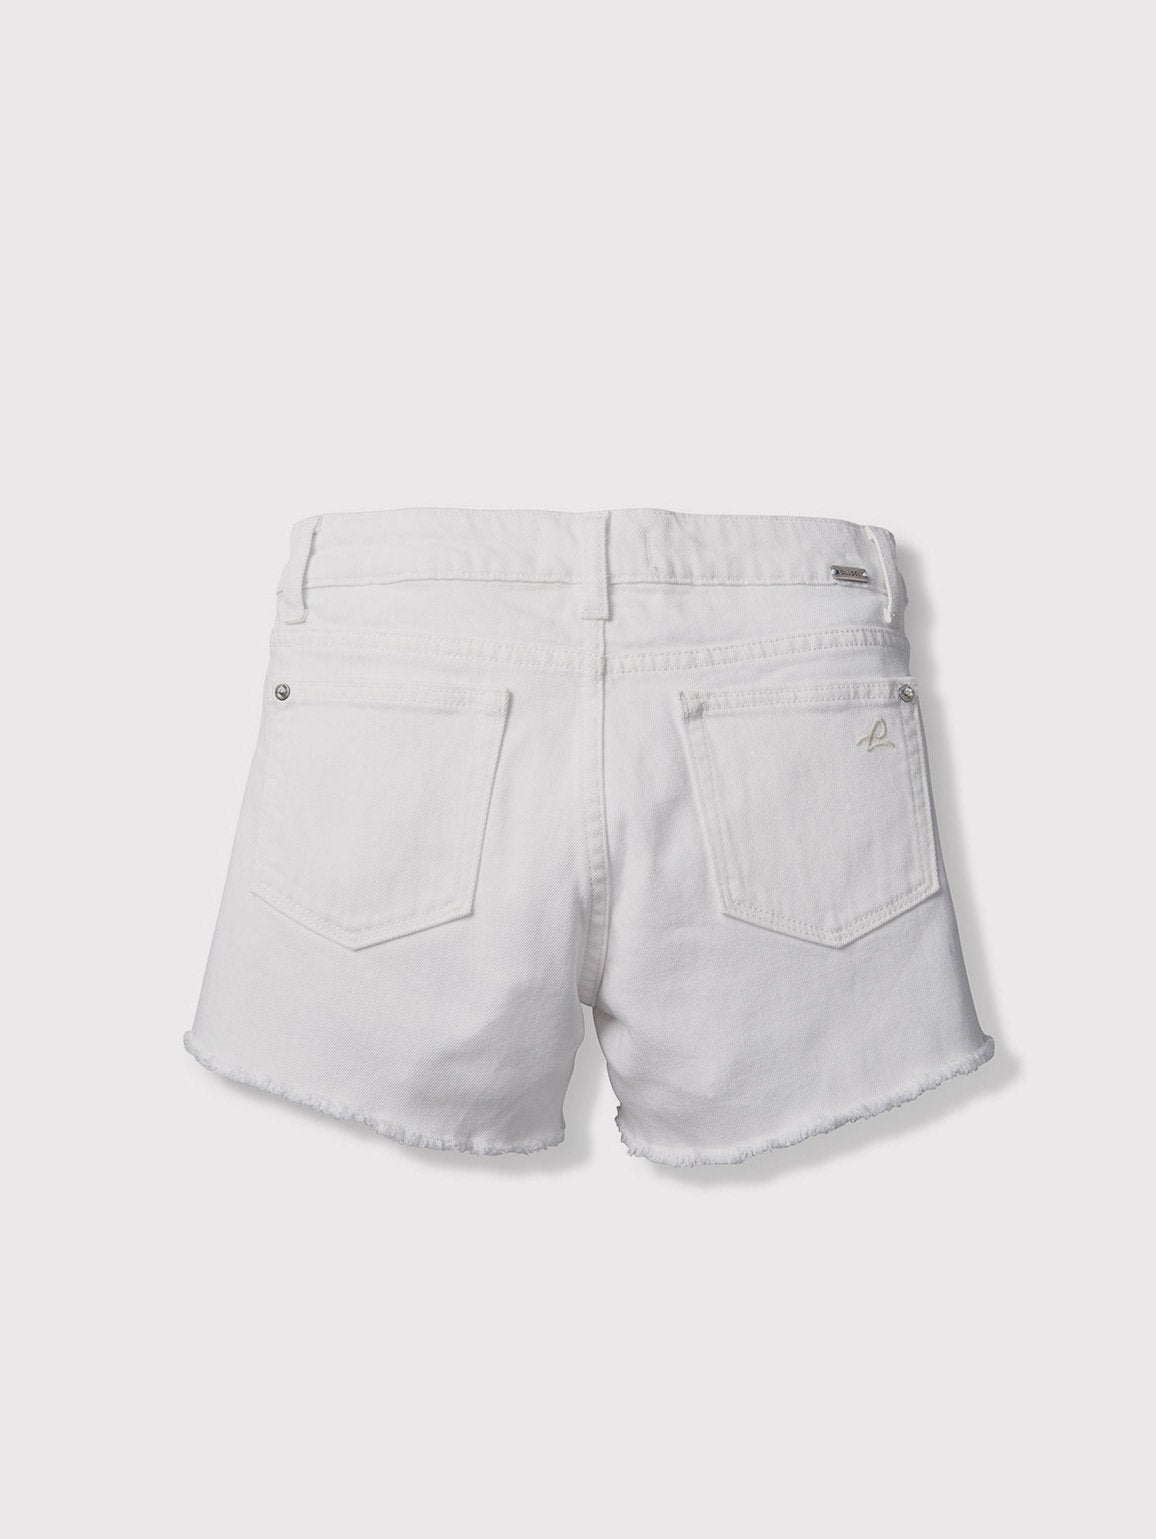 Girls - White Denim Shorts - Lucy/G Short Snowcap - DL1961